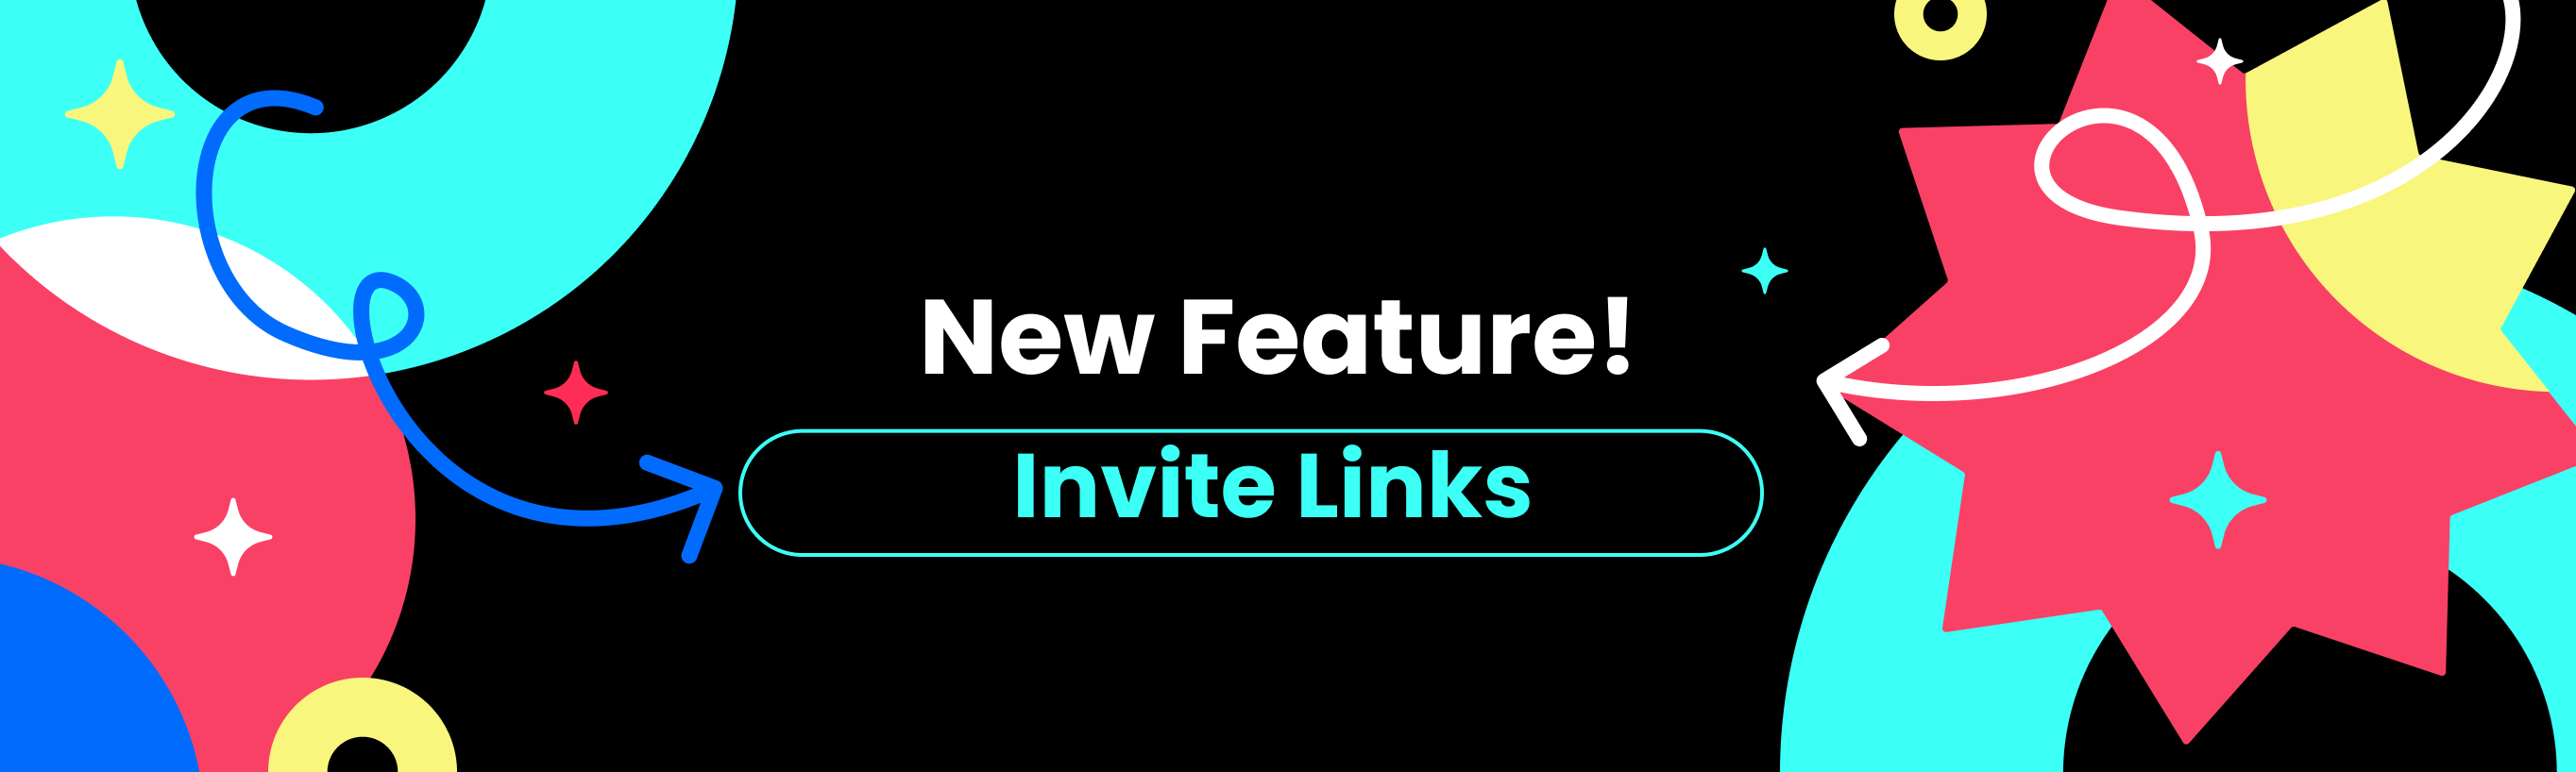 TikTok Creator Marketplace New Feature: Invite Links